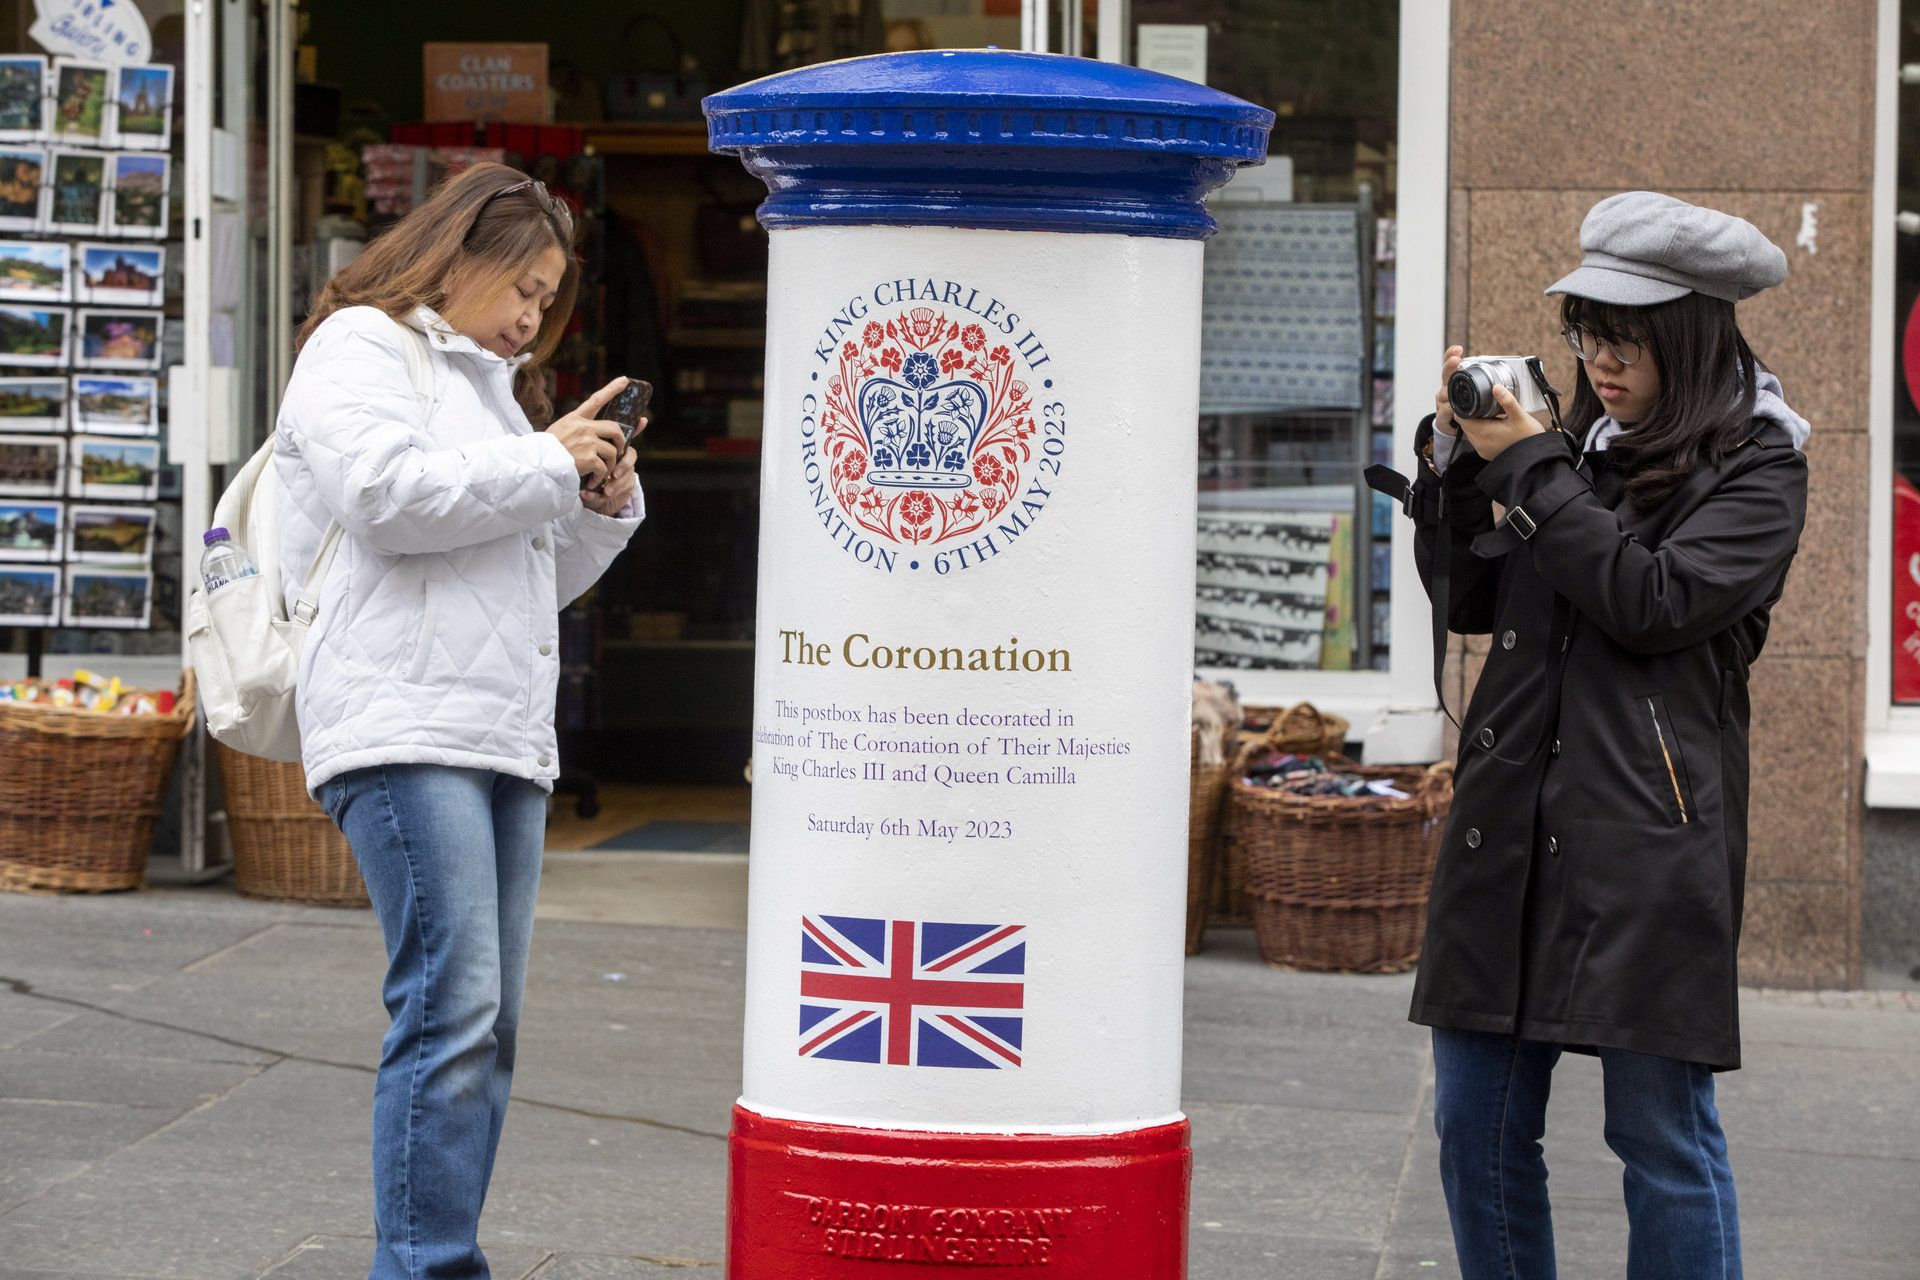 New postbox on Edinburgh's Royal Mile features coronation emblem